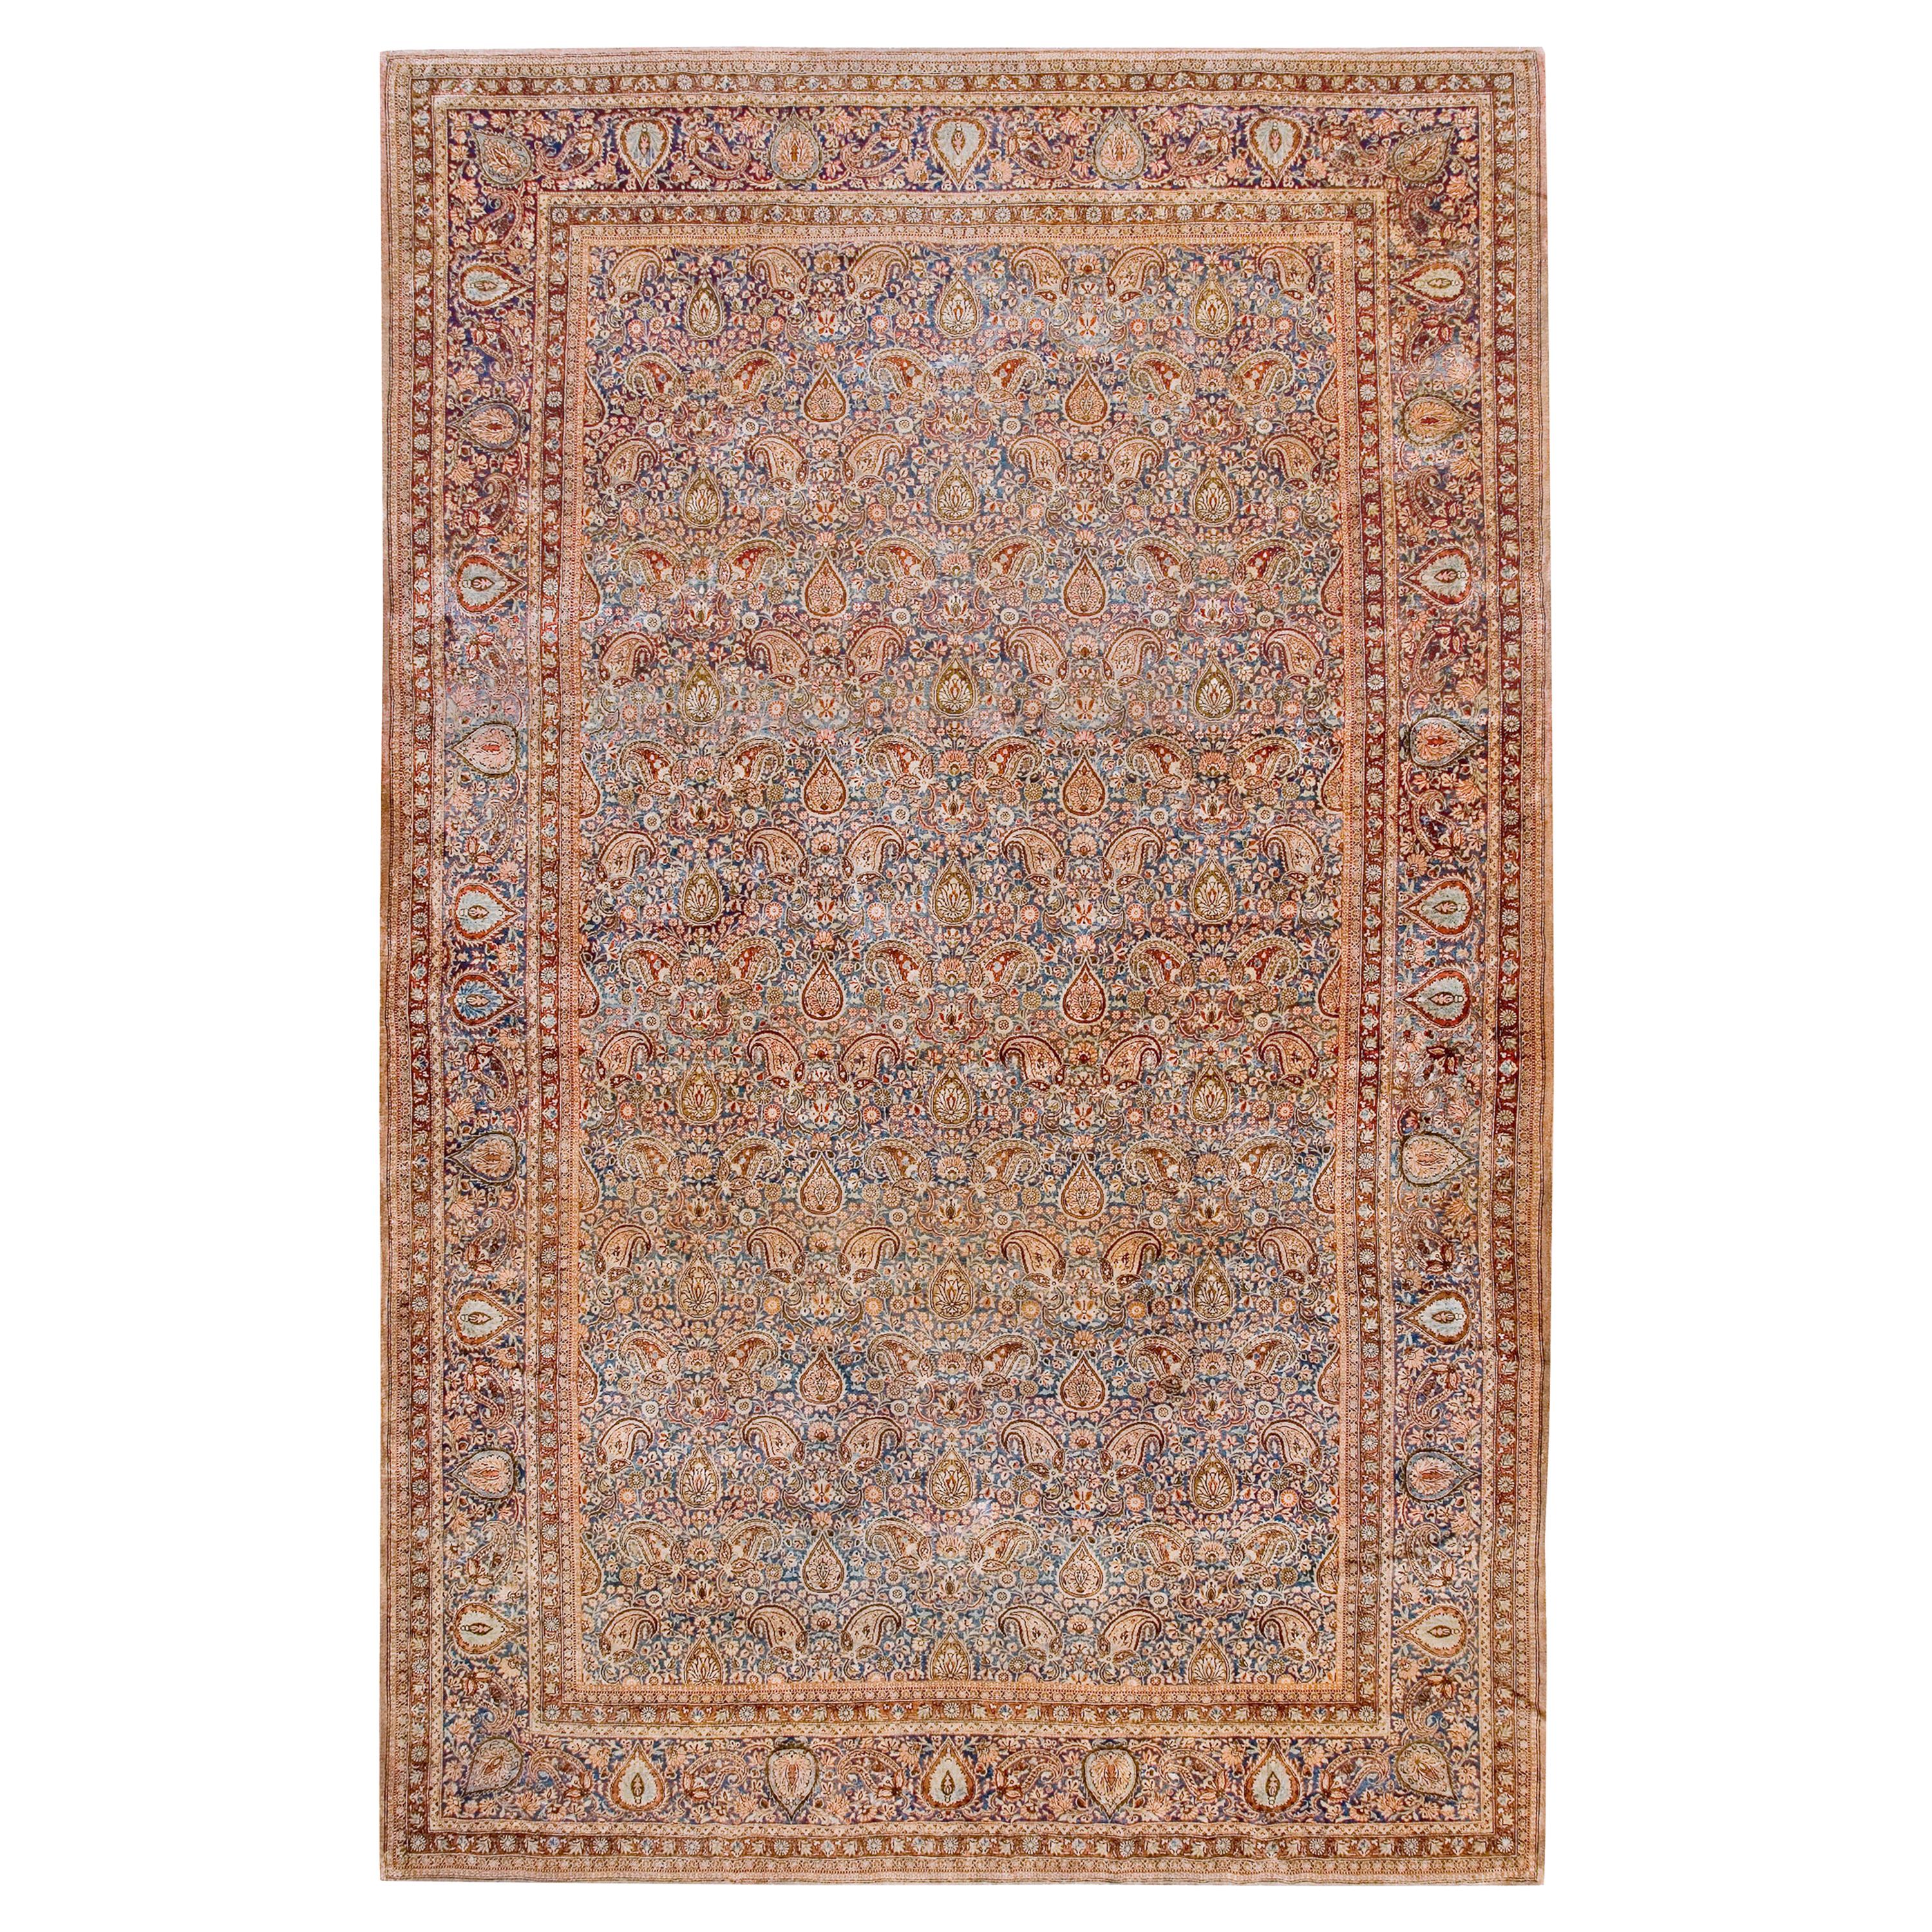 Early 20th Century Persian Dabir Kashan Carpet ( 10'4" x 16'10" - 315 x 513 )